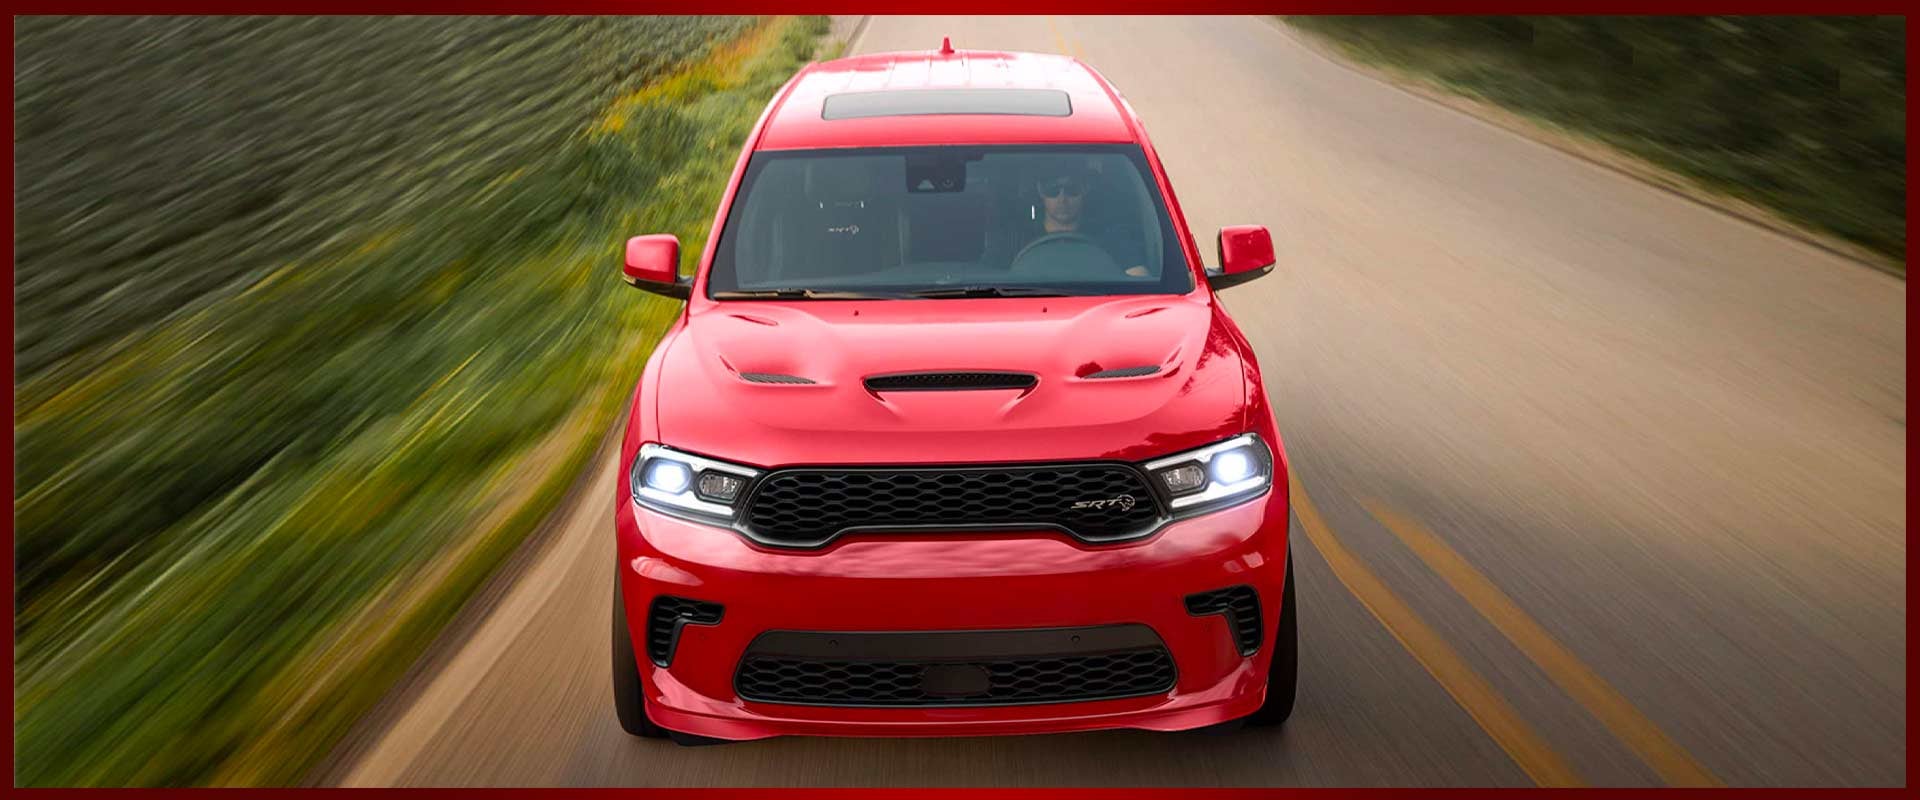 2021 Dodge Durango | Interior, Exterior, Tech, Performance, & More!